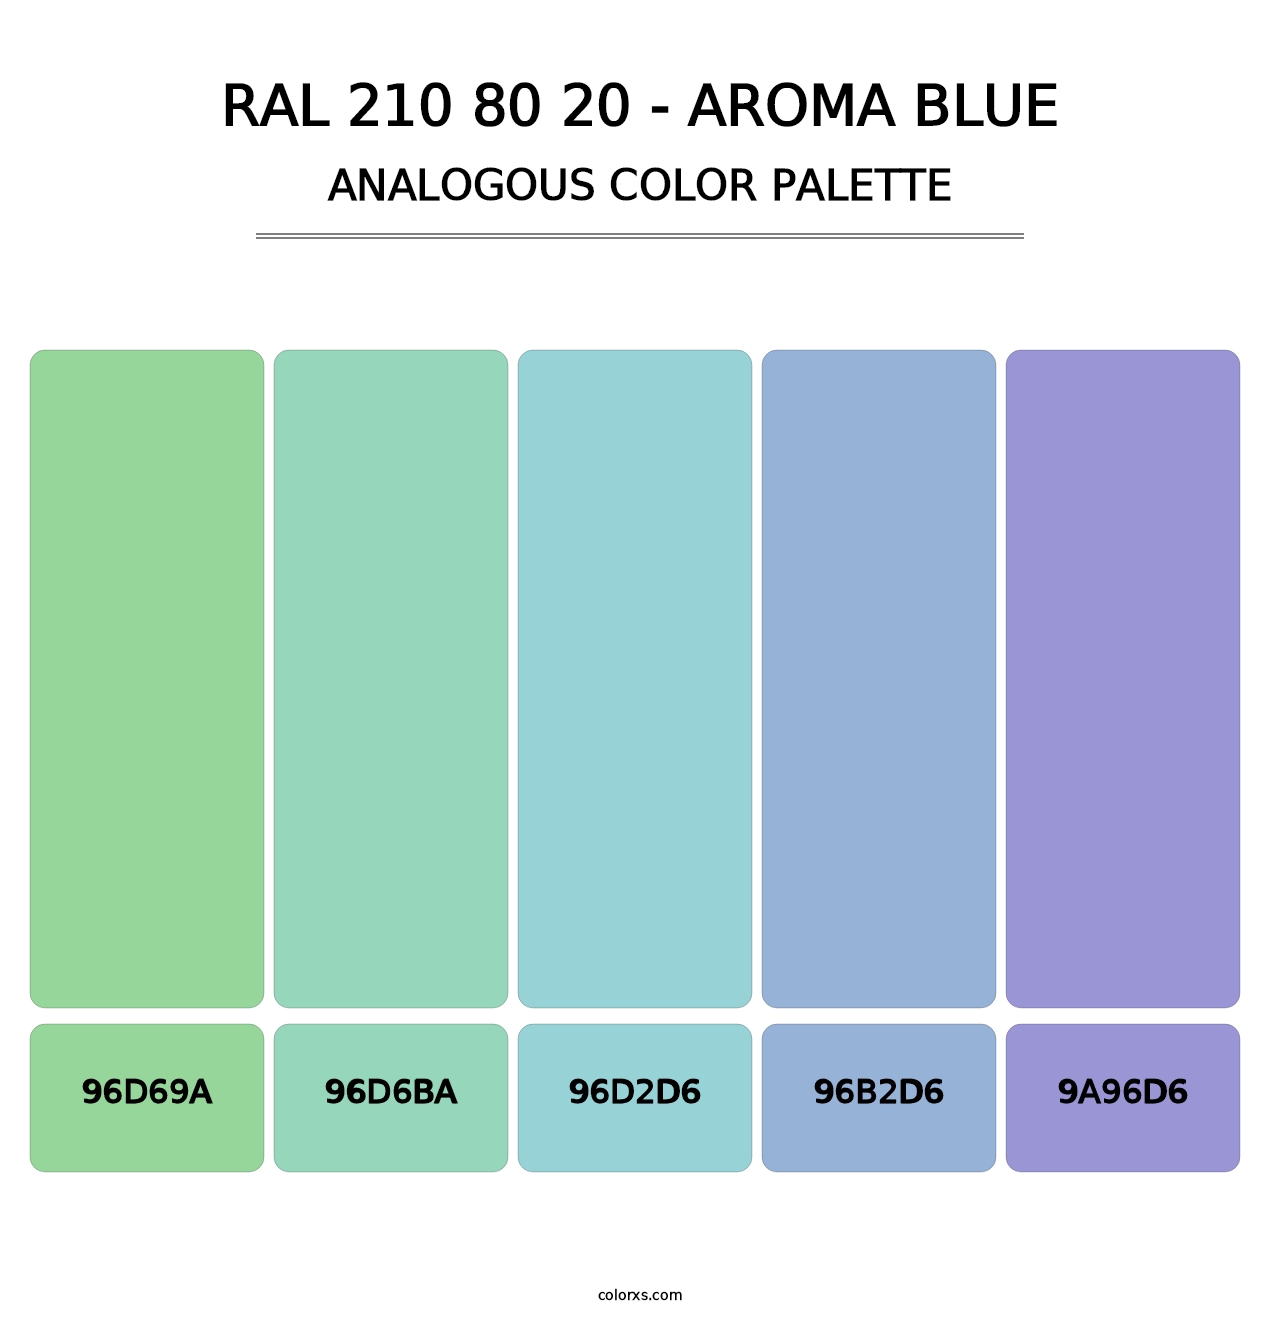 RAL 210 80 20 - Aroma Blue - Analogous Color Palette